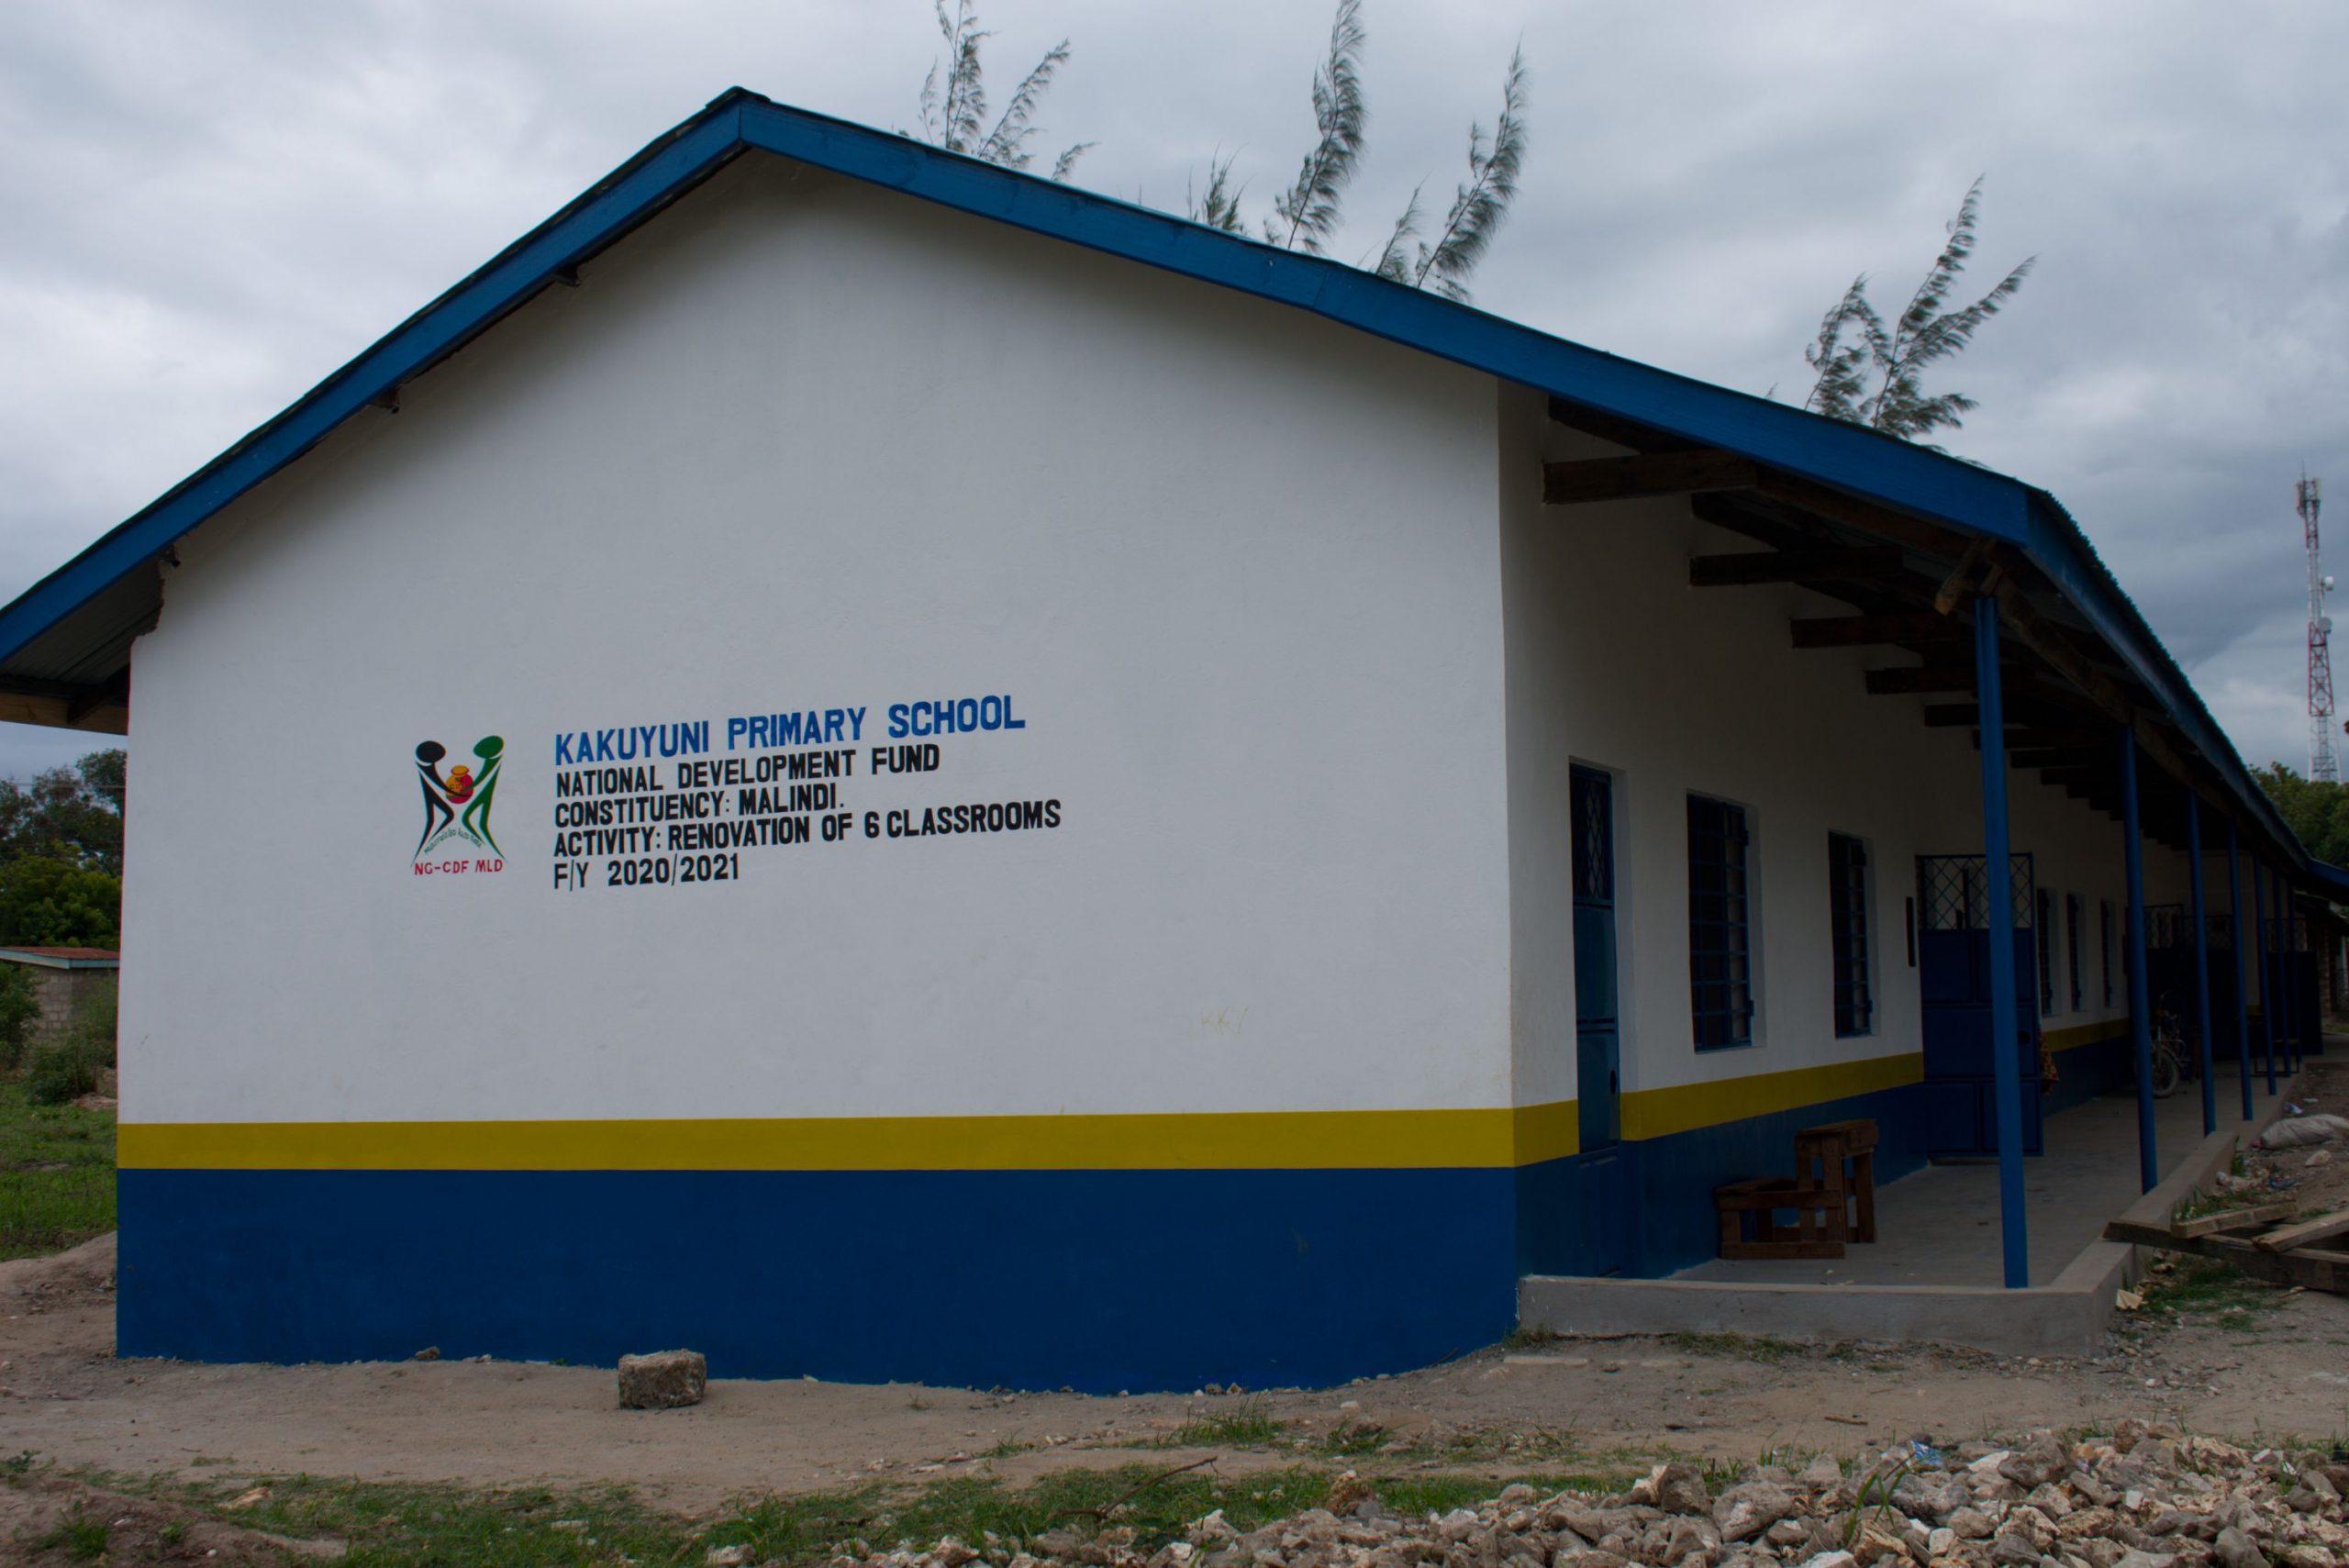 https://malindi.ngcdf.go.ke/wp-content/uploads/2021/09/kakuyuni-primary-school-Renovation-of-7-no-classrooms-1-scaled.jpg